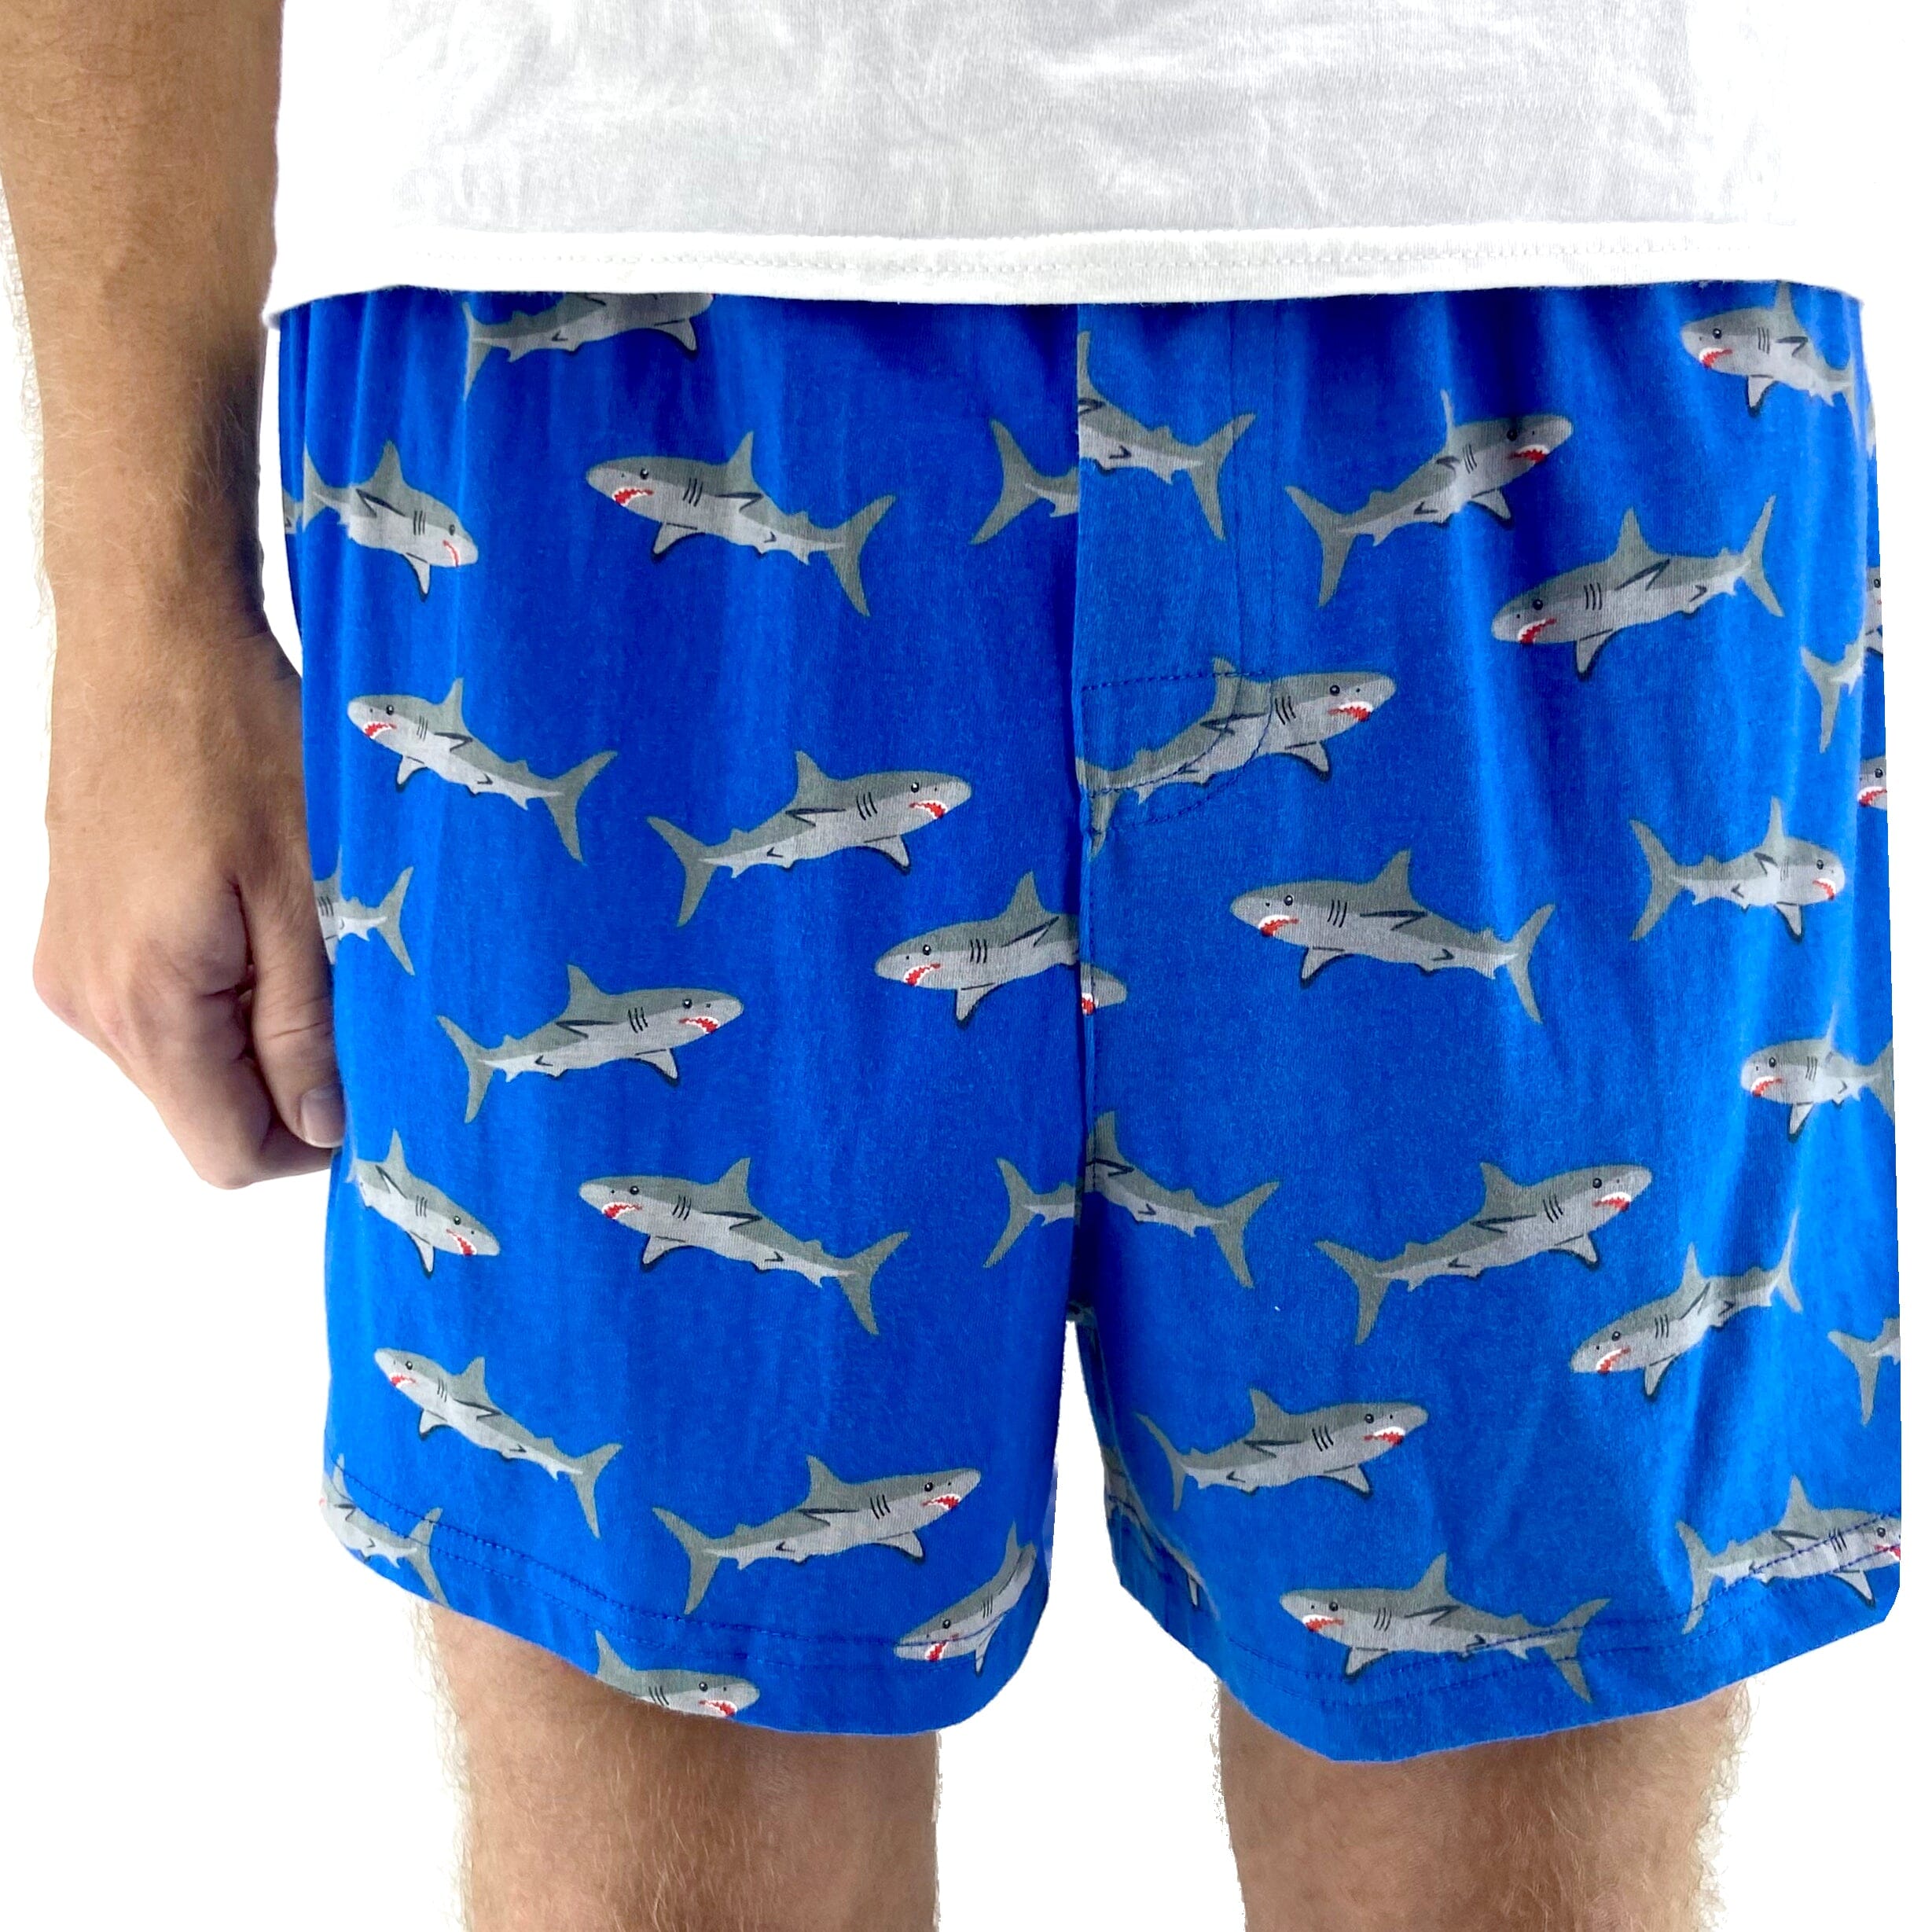 Men's Bright Blue Shark All Over Print Cotton Knit Pajama Sleep Shorts